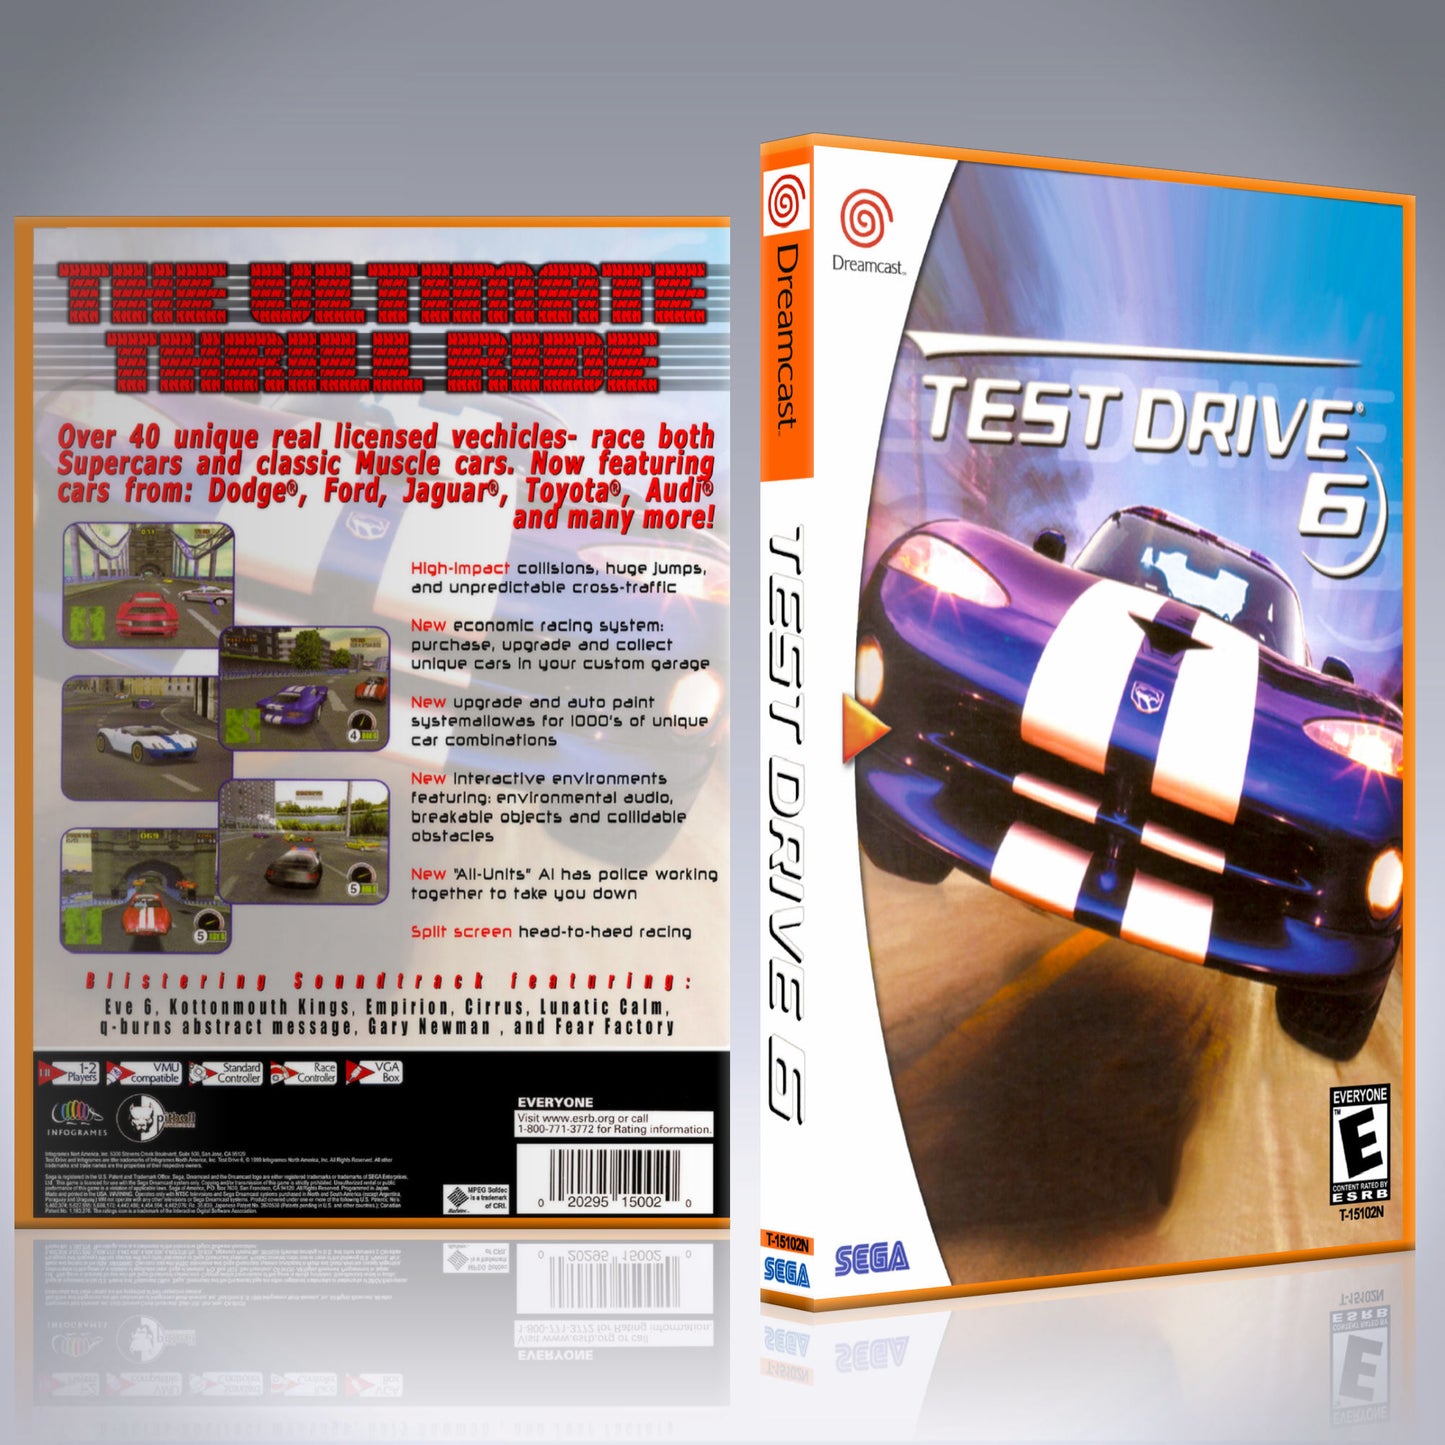 Dreamcast Custom Case - NO GAME - Test Drive 6